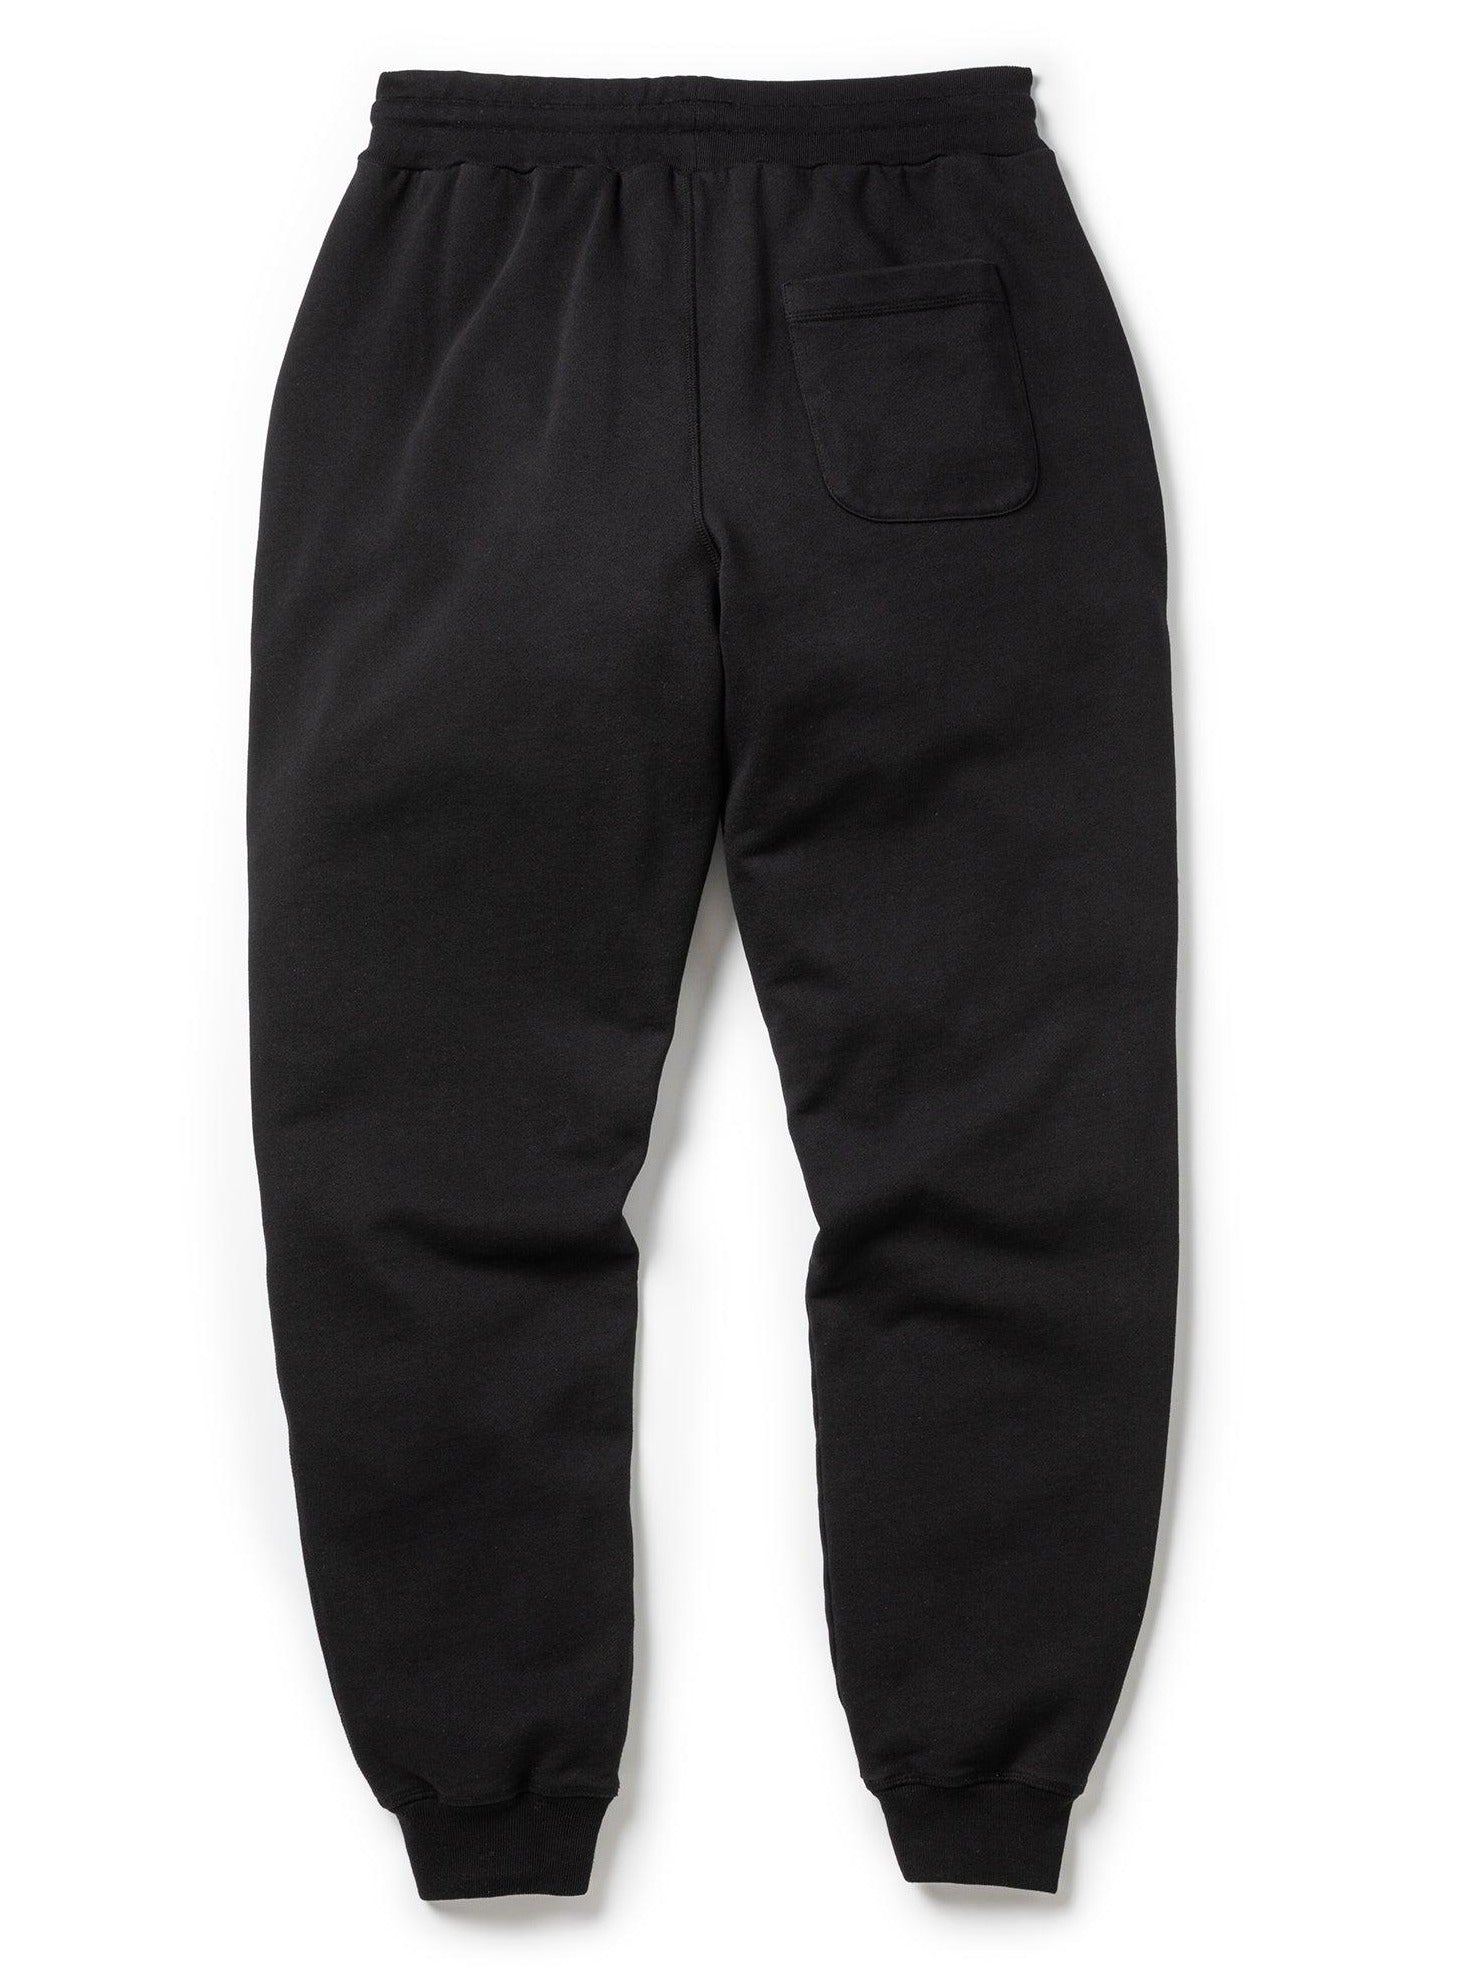 Men's Loose & Comfort Fit Sweatpants - Black – ORILABO Project